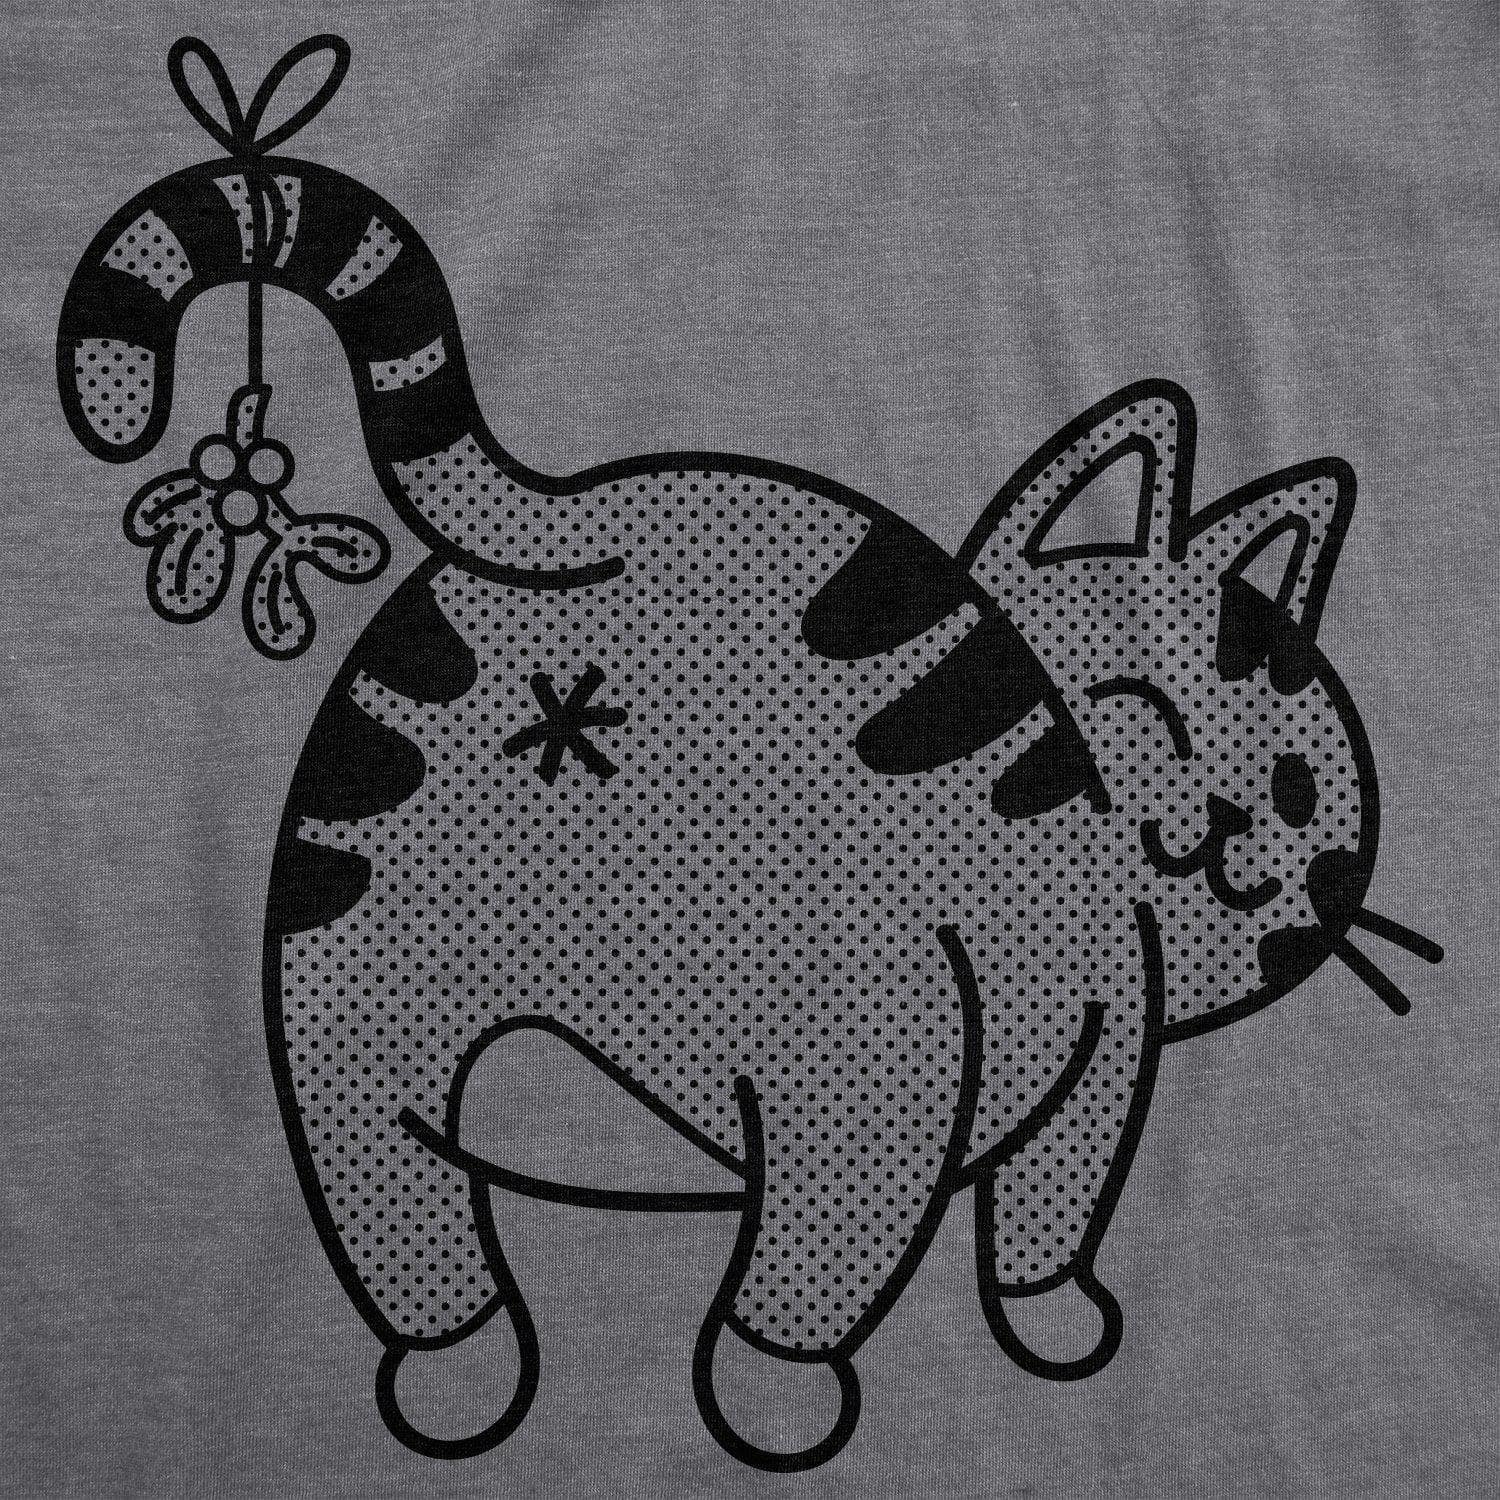 Mistletoe Cat Butt Women's Tshirt - Crazy Dog T-Shirts